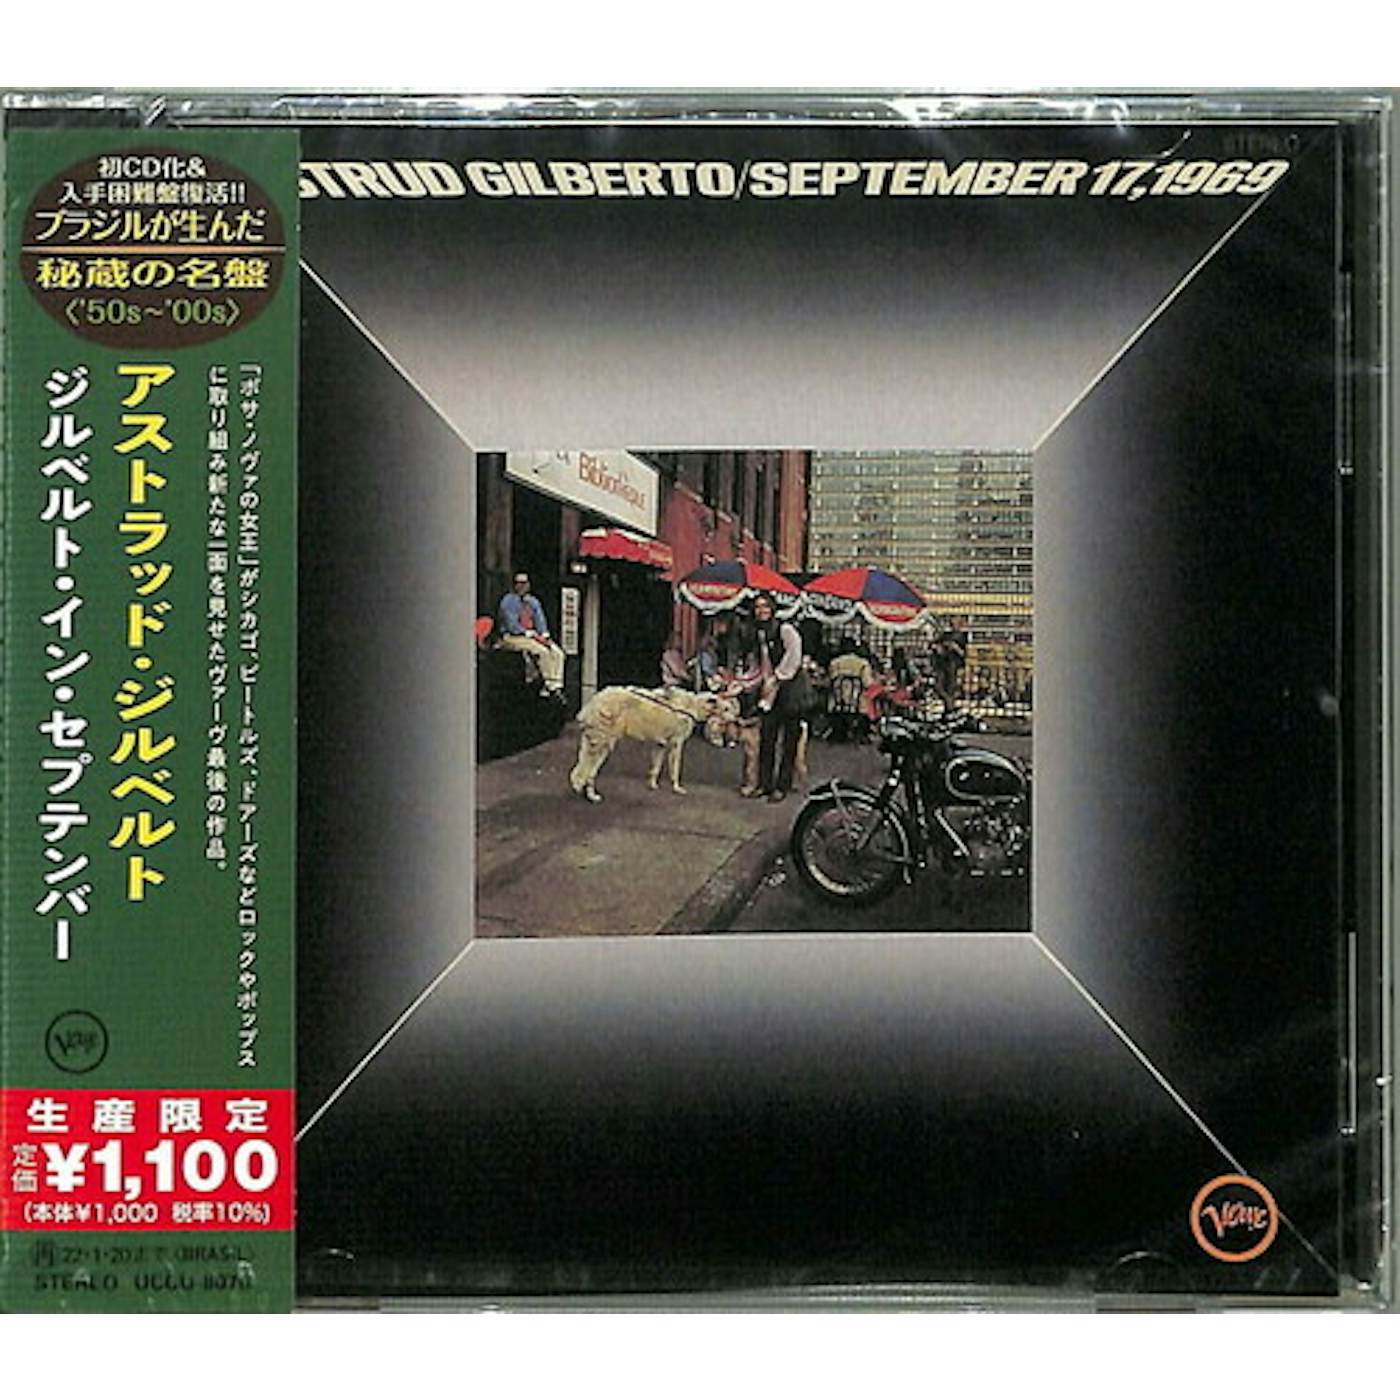 Astrud Gilberto SEPTEMBER 17 1969 CD